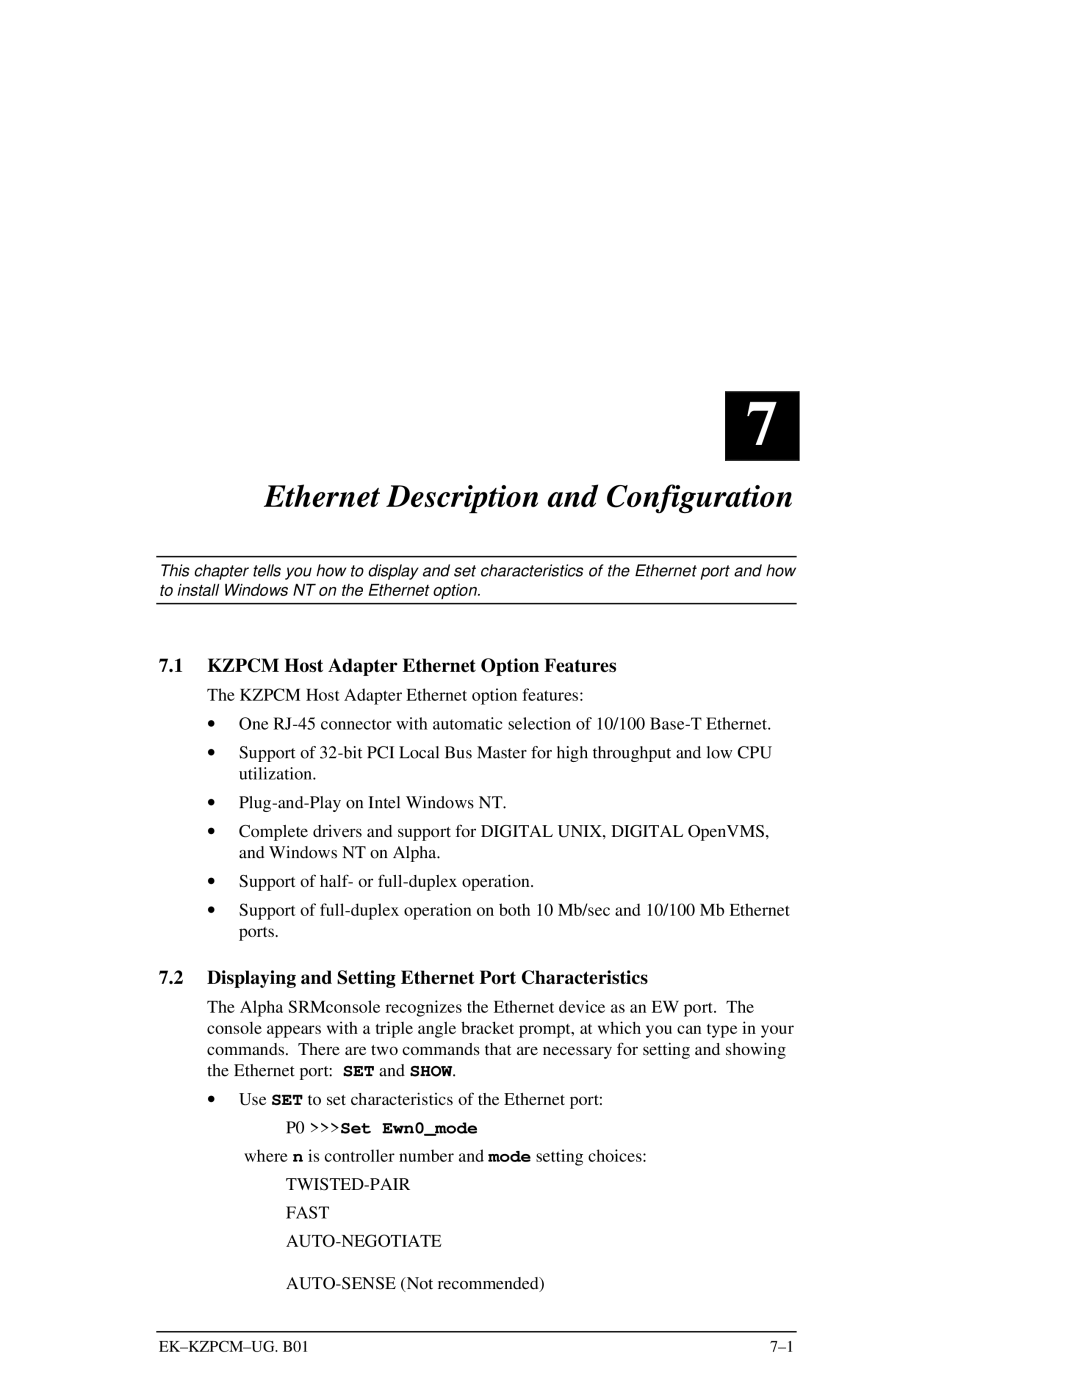 Intel EK-KZPCM-UG Ethernet Description and Configuration, KZPCM Host Adapter Ethernet Option Features, P0 Set Ewn0mode 